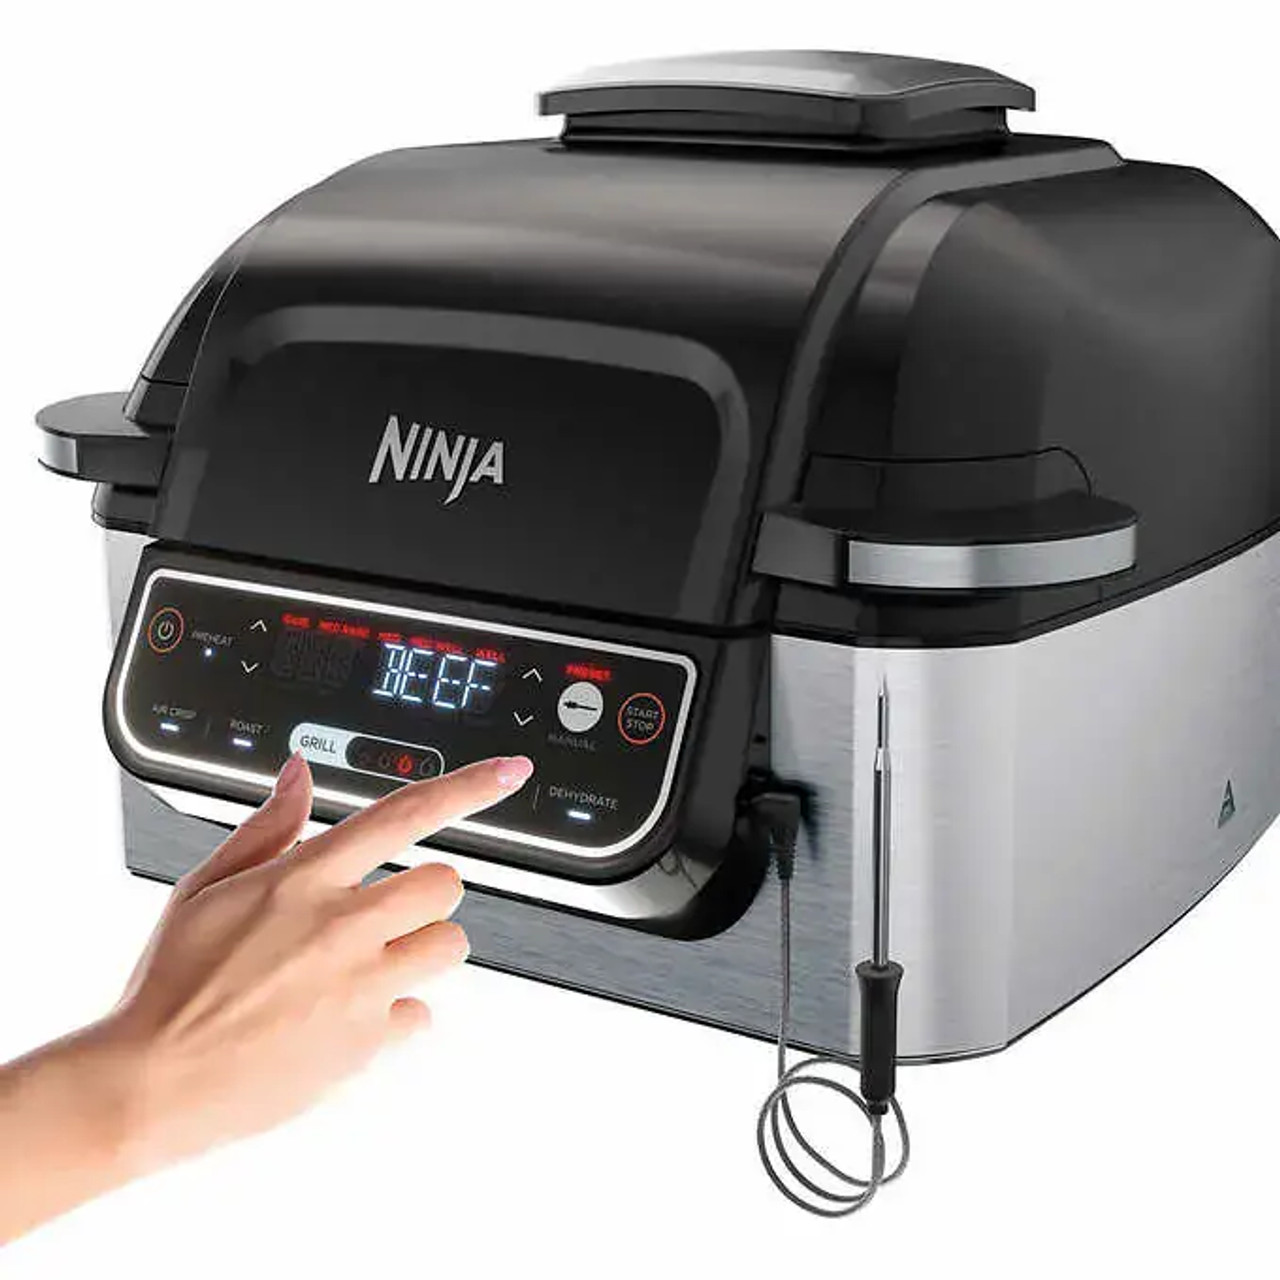  Ninja Foodi 5-in-1 Indoor Grill w/ 4-Quart Air Fryer